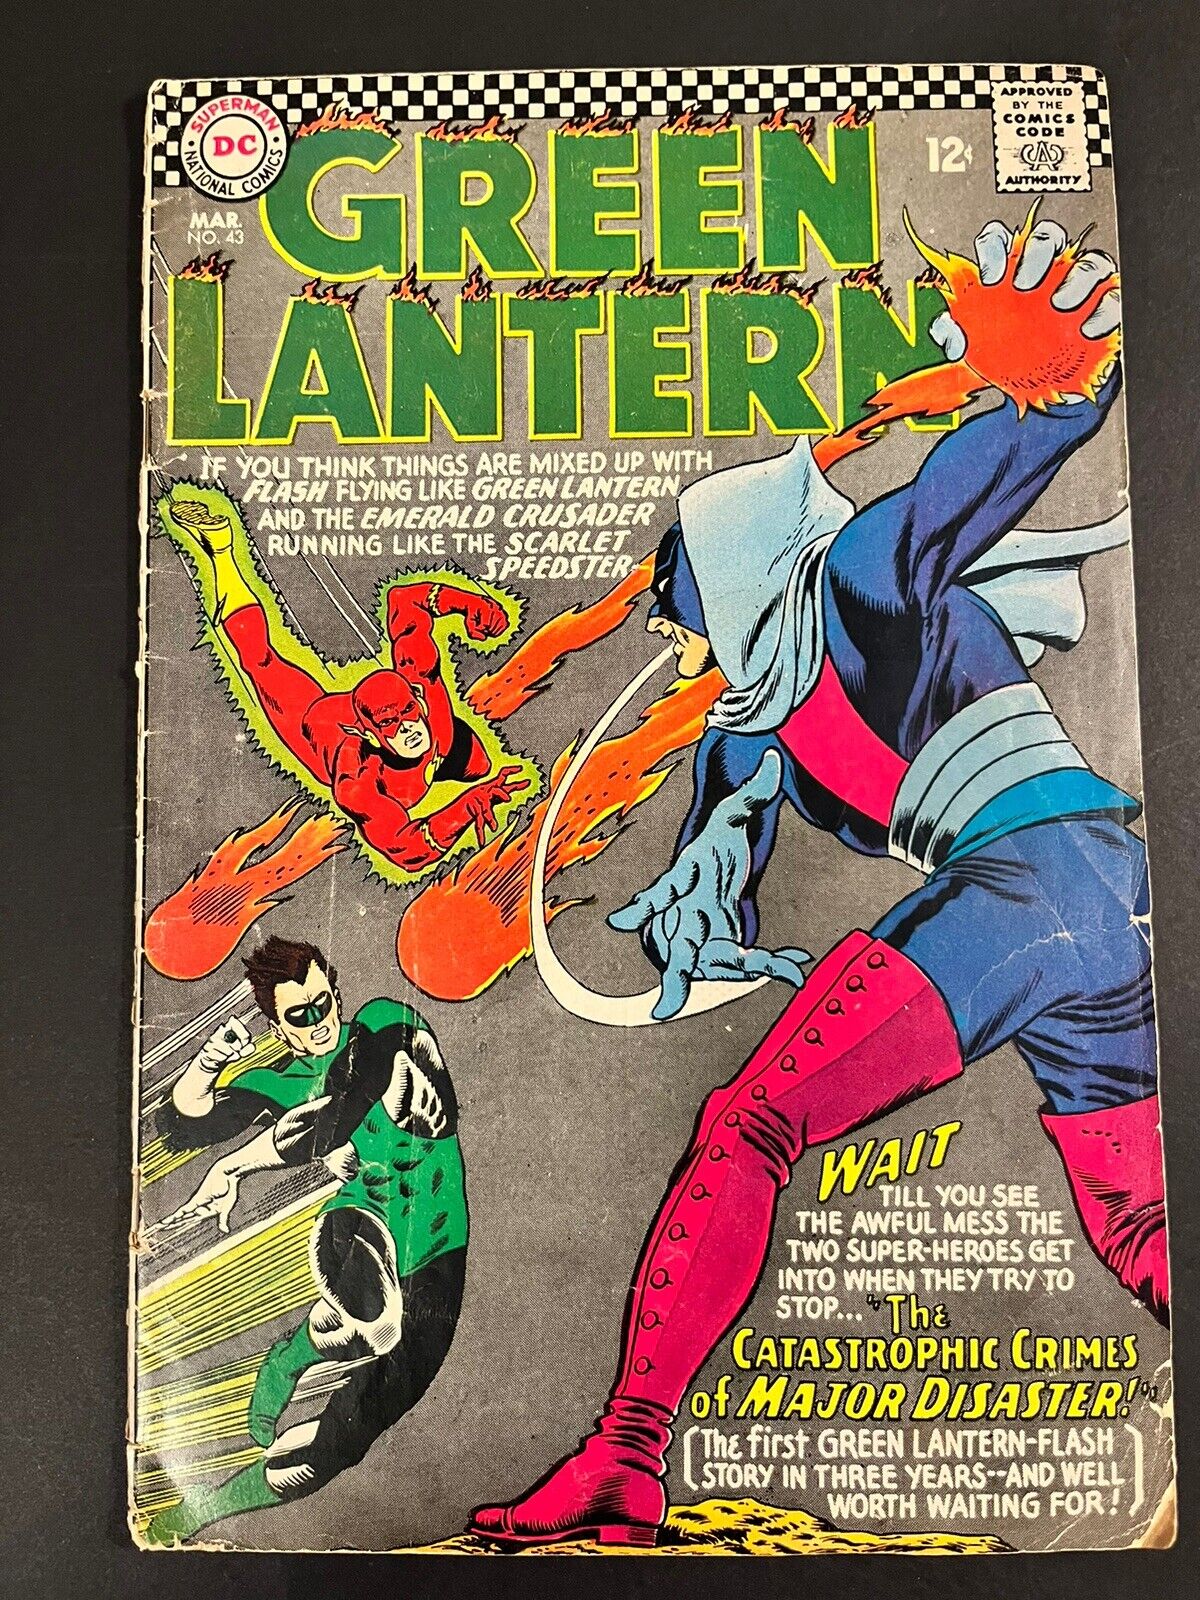 Green Lantern#43-Flash Crossover-Major Disaster-Low/Mid Grade-Silver Age Kane